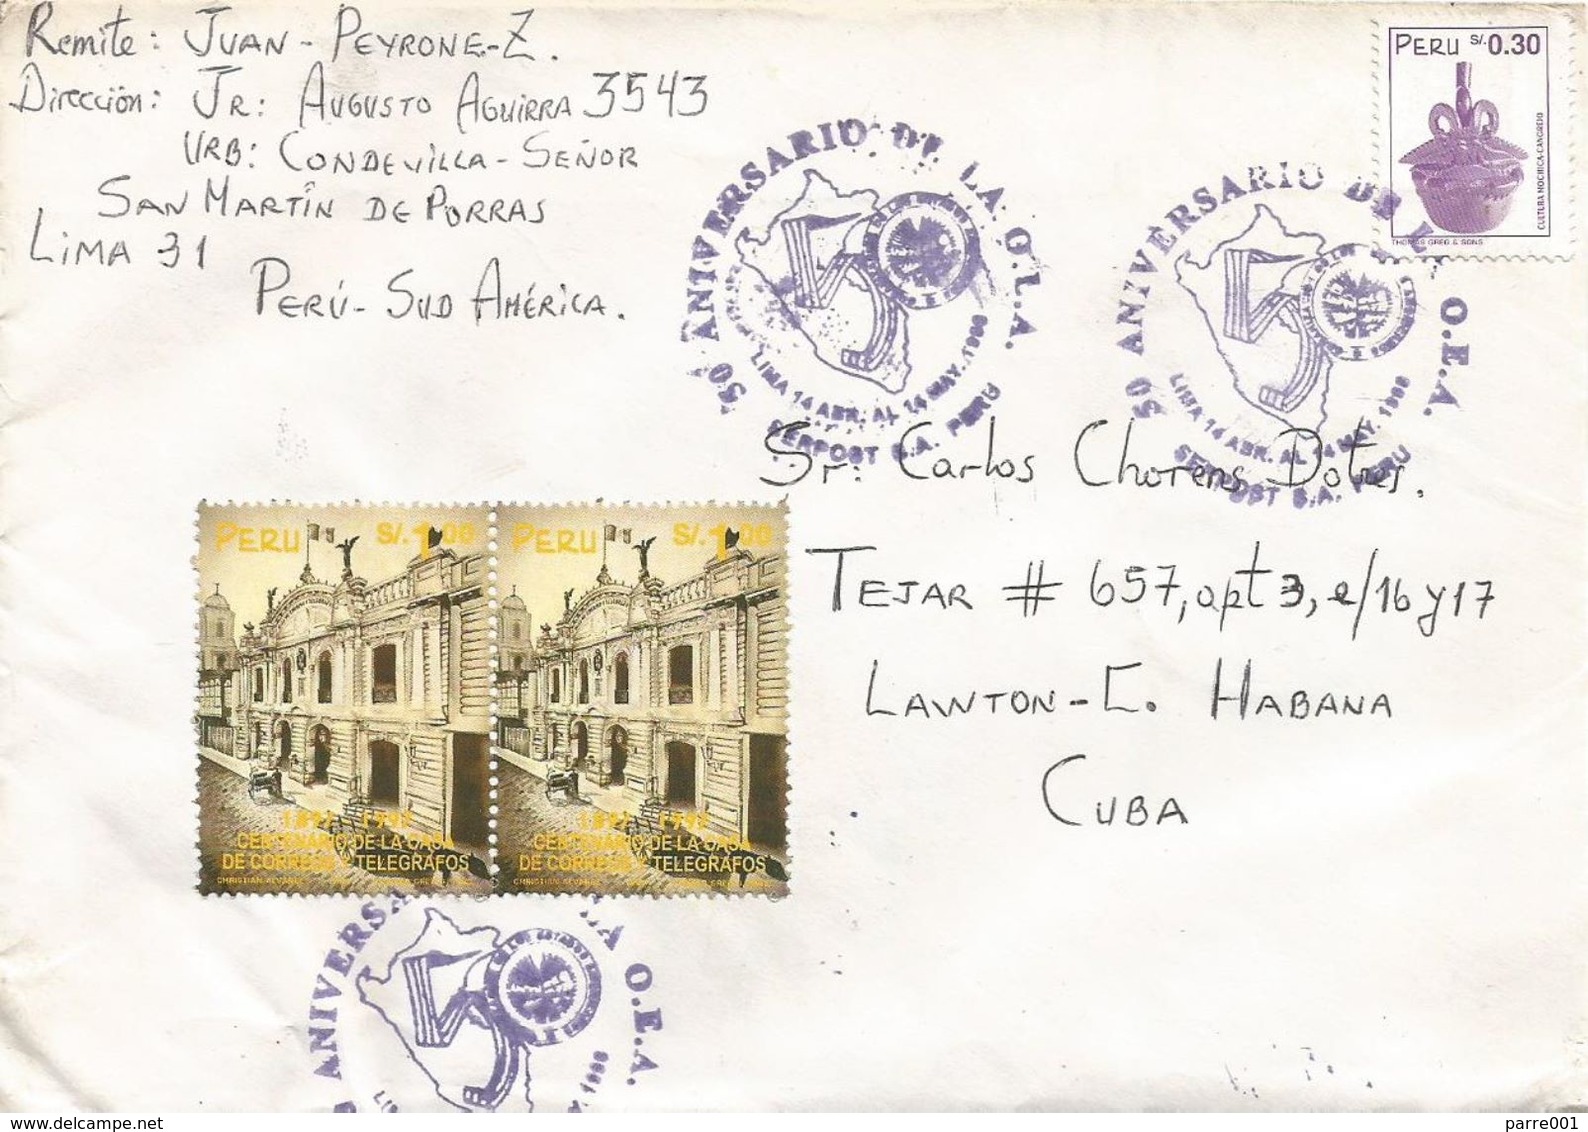 Peru 1998 Lima Postal Service Handstamp Organisation Of Amercican States Pottery Drum Cover - Peru